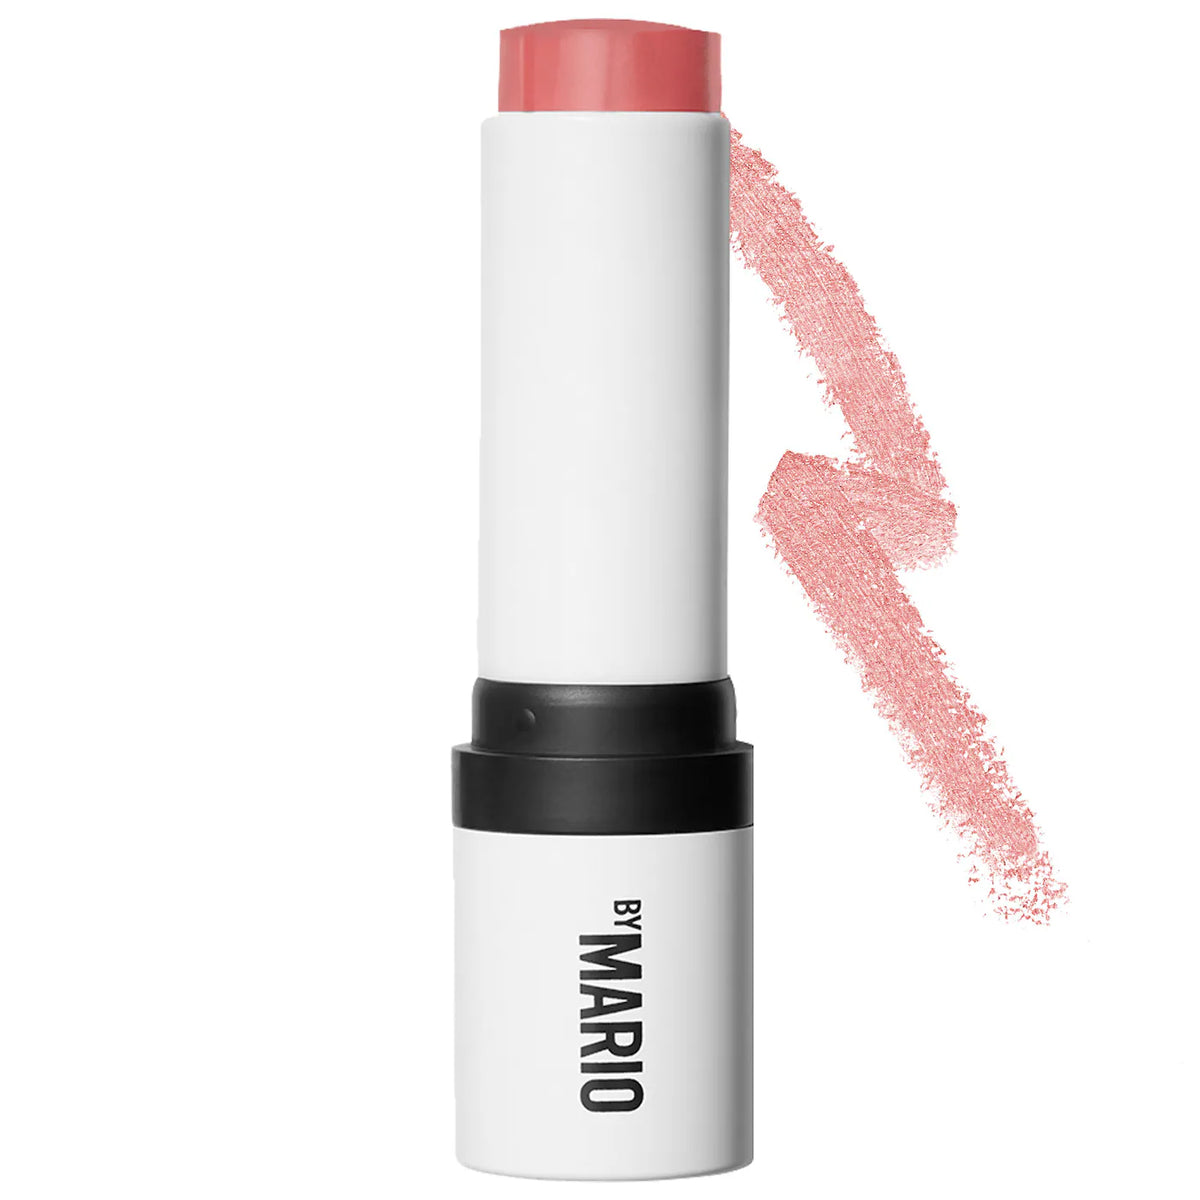 MAKEUP BY MARIO Soft Pop Blush Stick Cream blush Volare Makeup Pale Petal - soft pink  